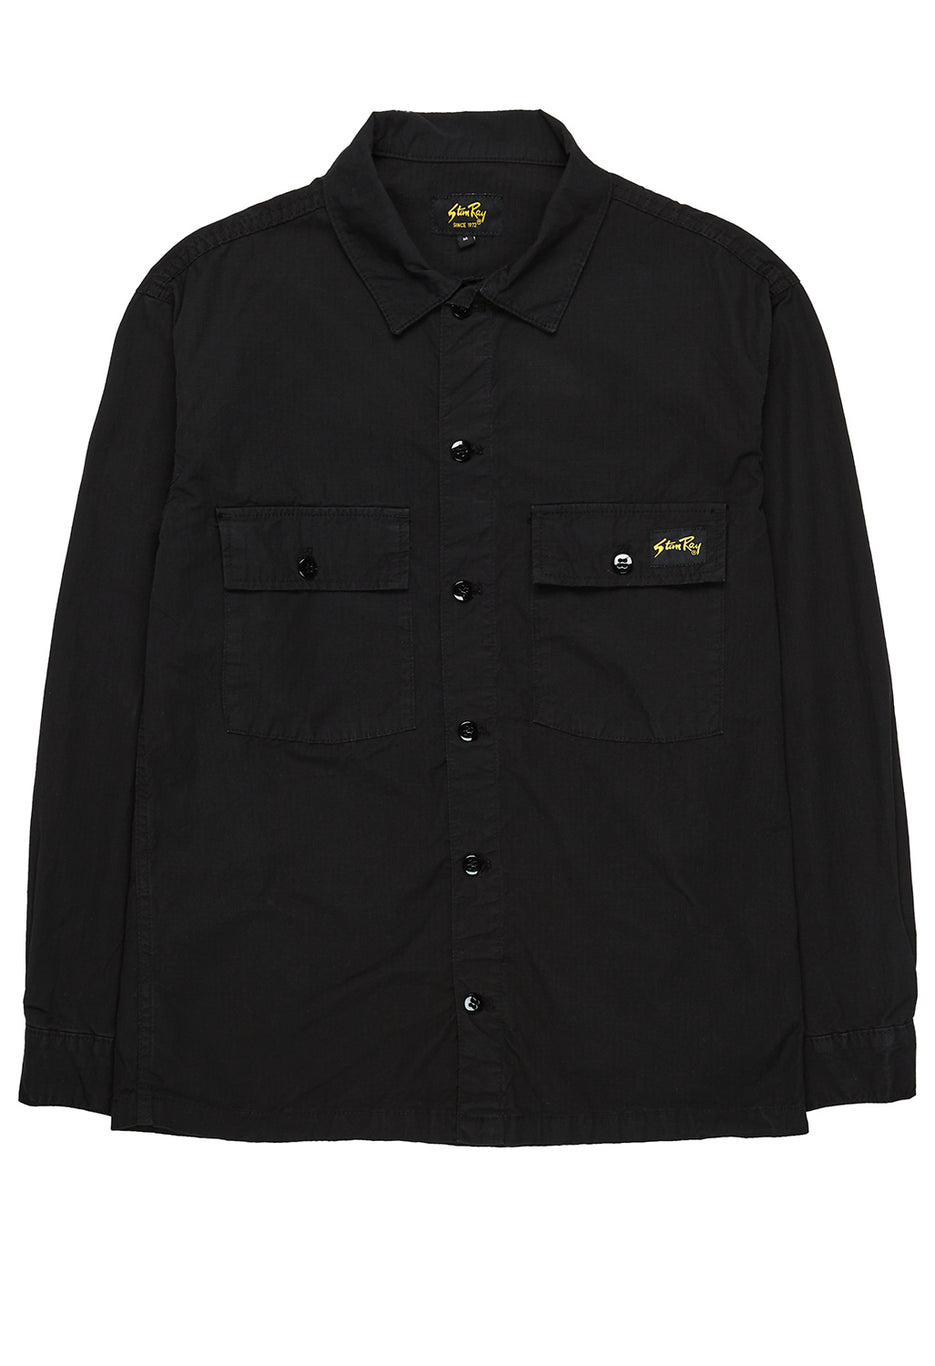 Stan Ray Men's CPO Shirt - Black Ripstop